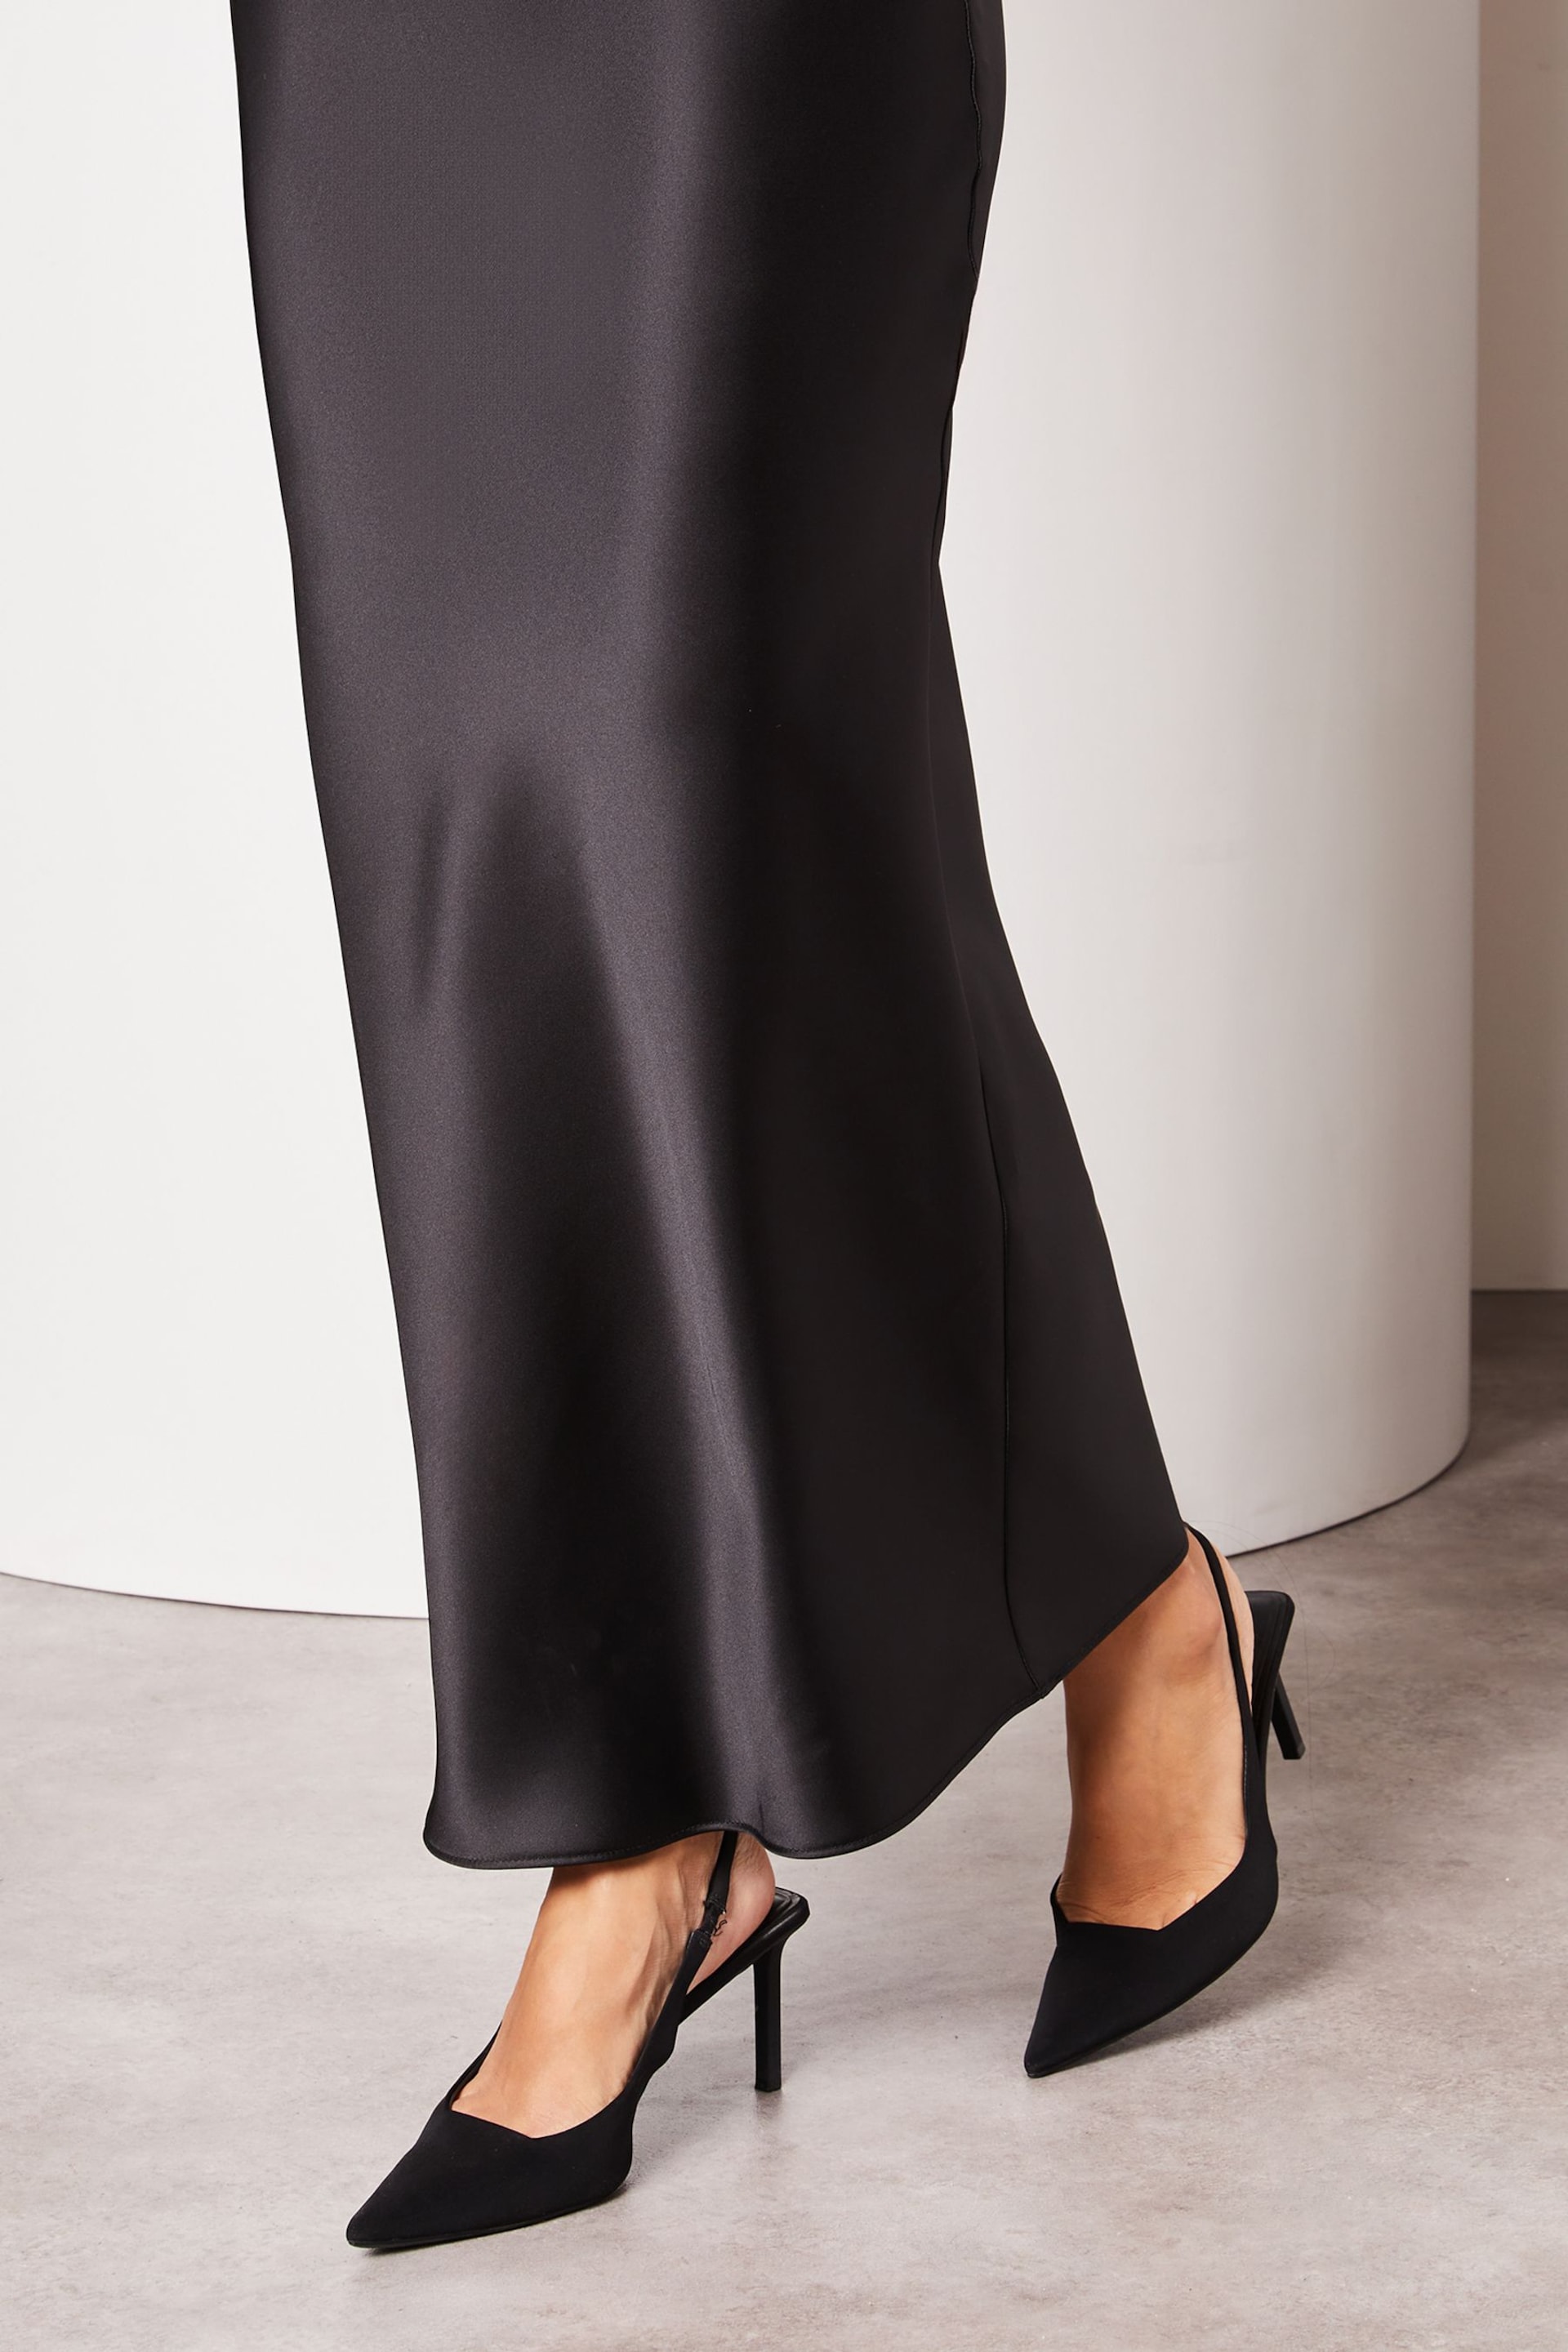 Lipsy Black Maxi Satin Skirt - Image 4 of 4